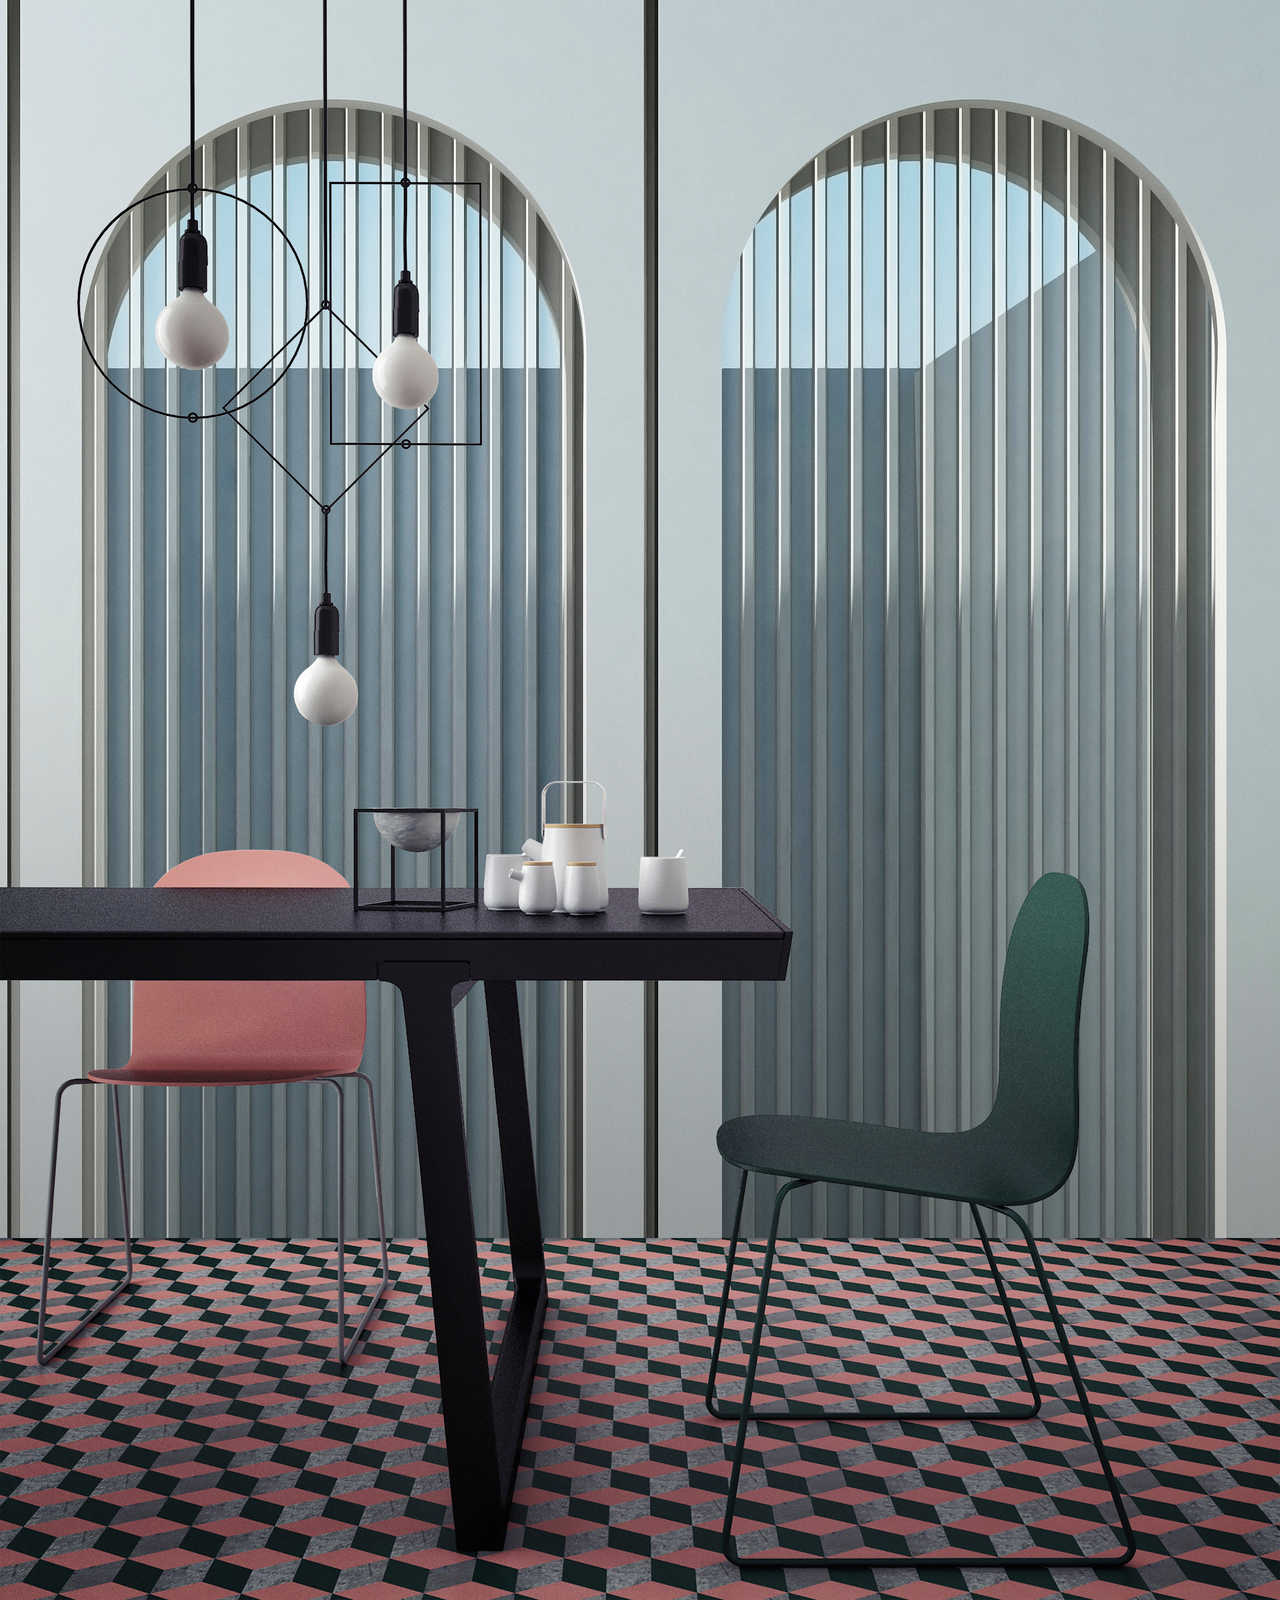             Escape Room 1 – Fototapete moderne Architektur Blau & Grau
        